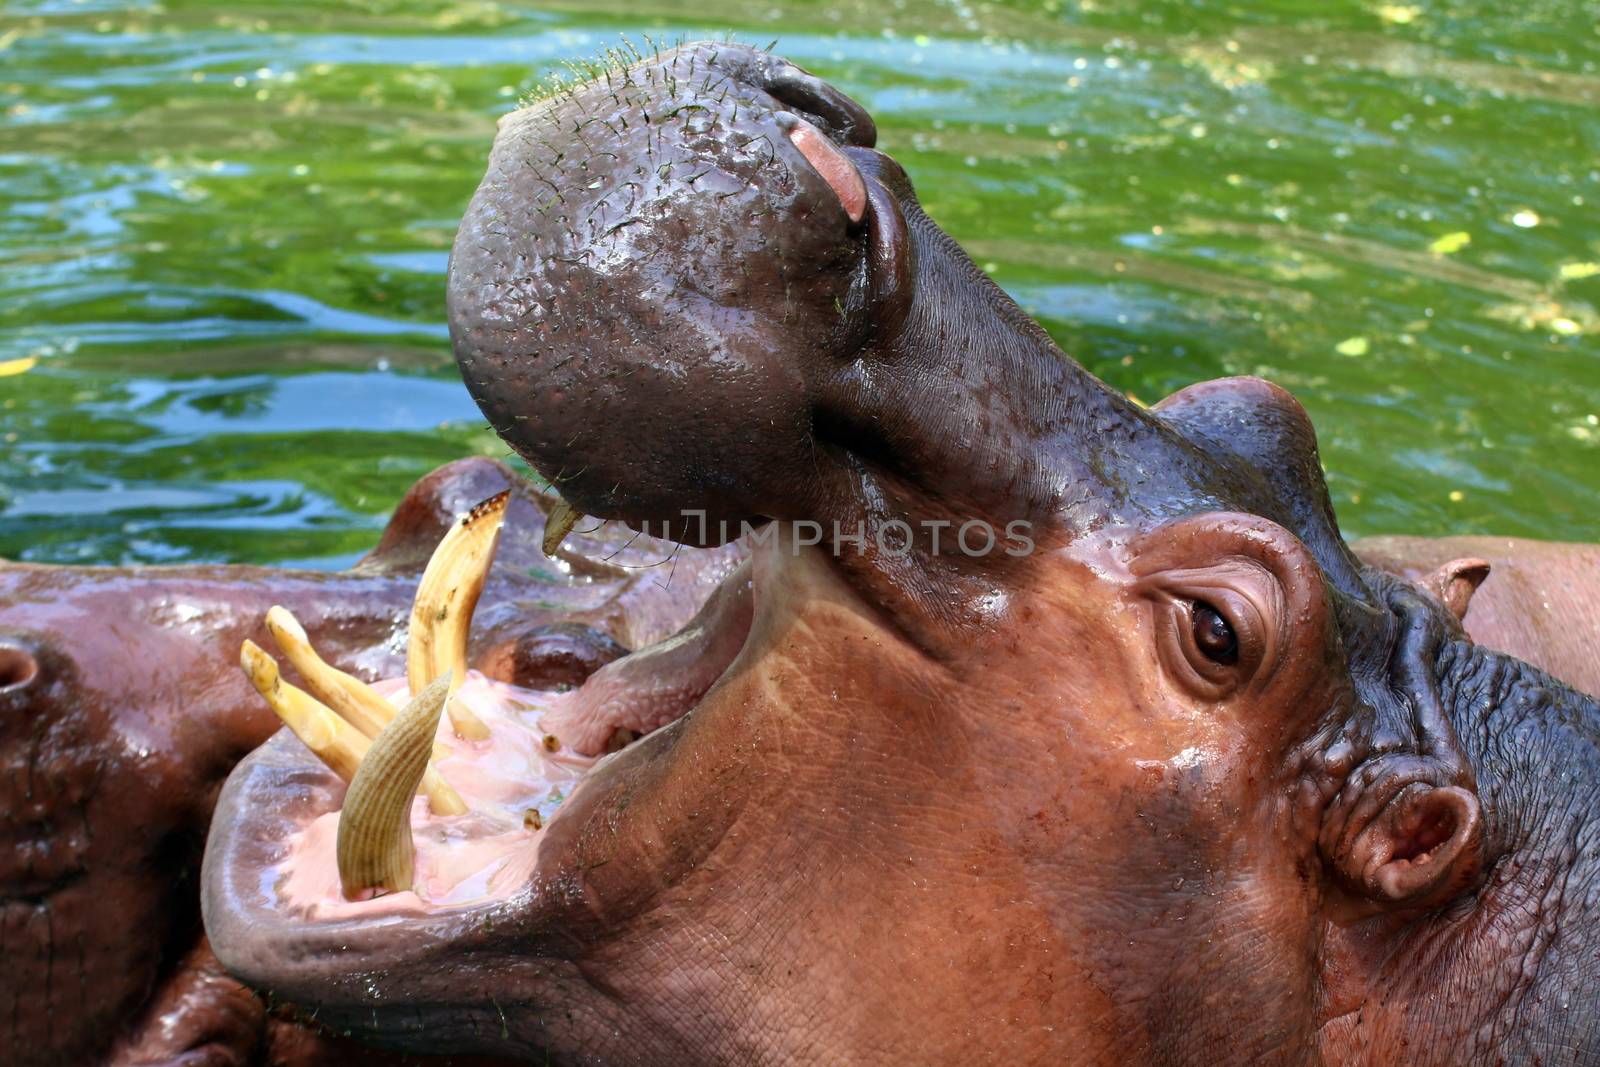 Hippo, Hippopotamus open mouth, Hippopotamus in water close up by cgdeaw